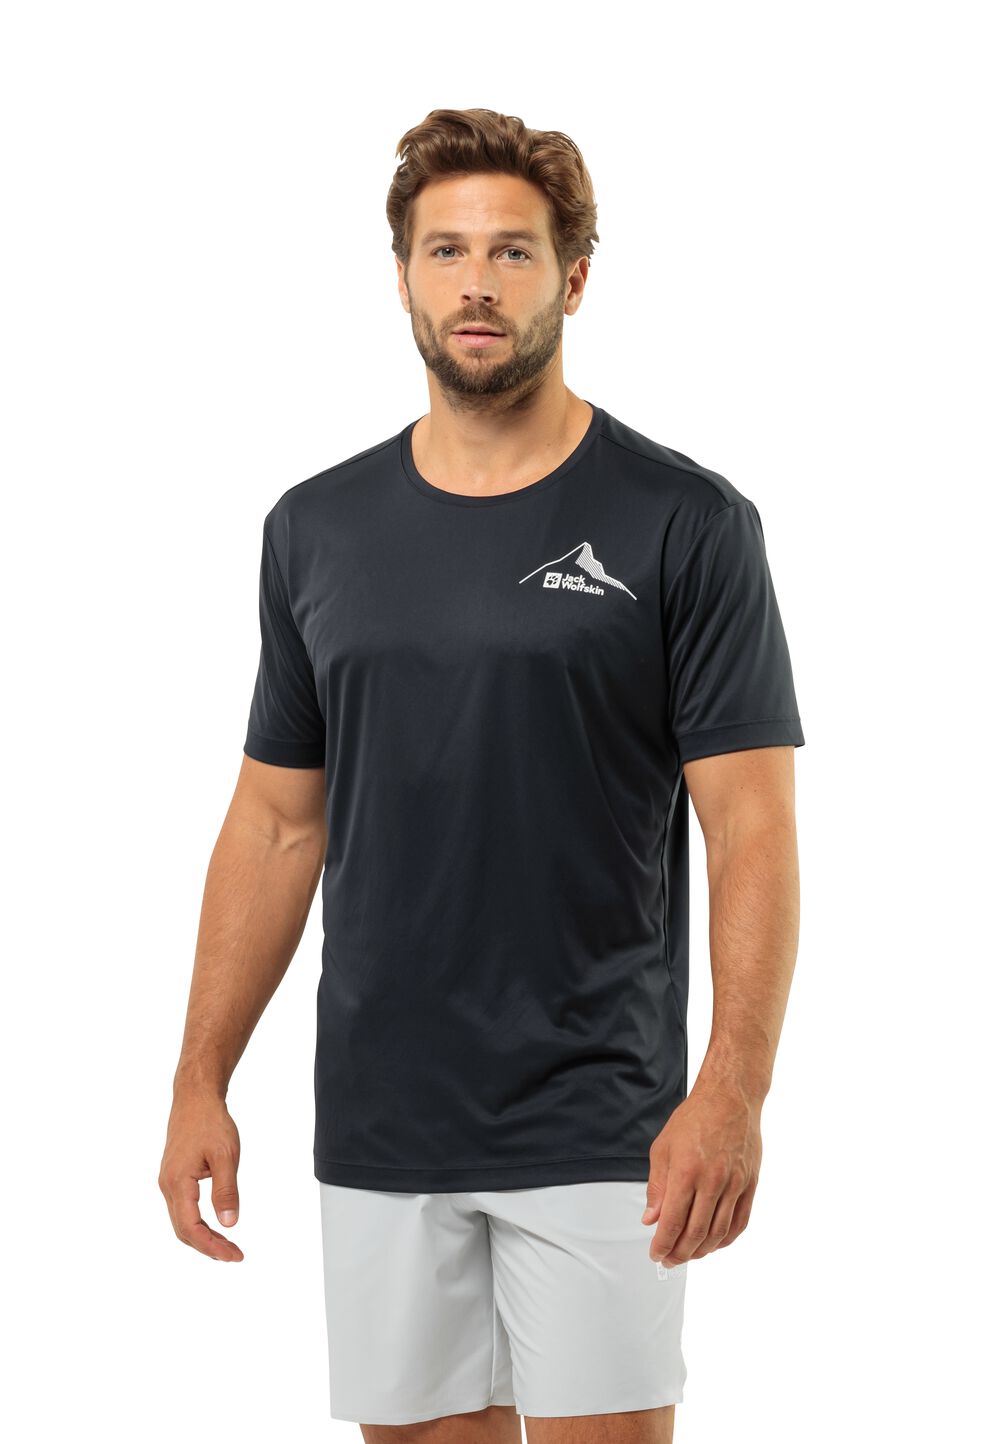 Jack Wolfskin Peak Graphic T-Shirt Men Functioneel shirt Heren S phantom